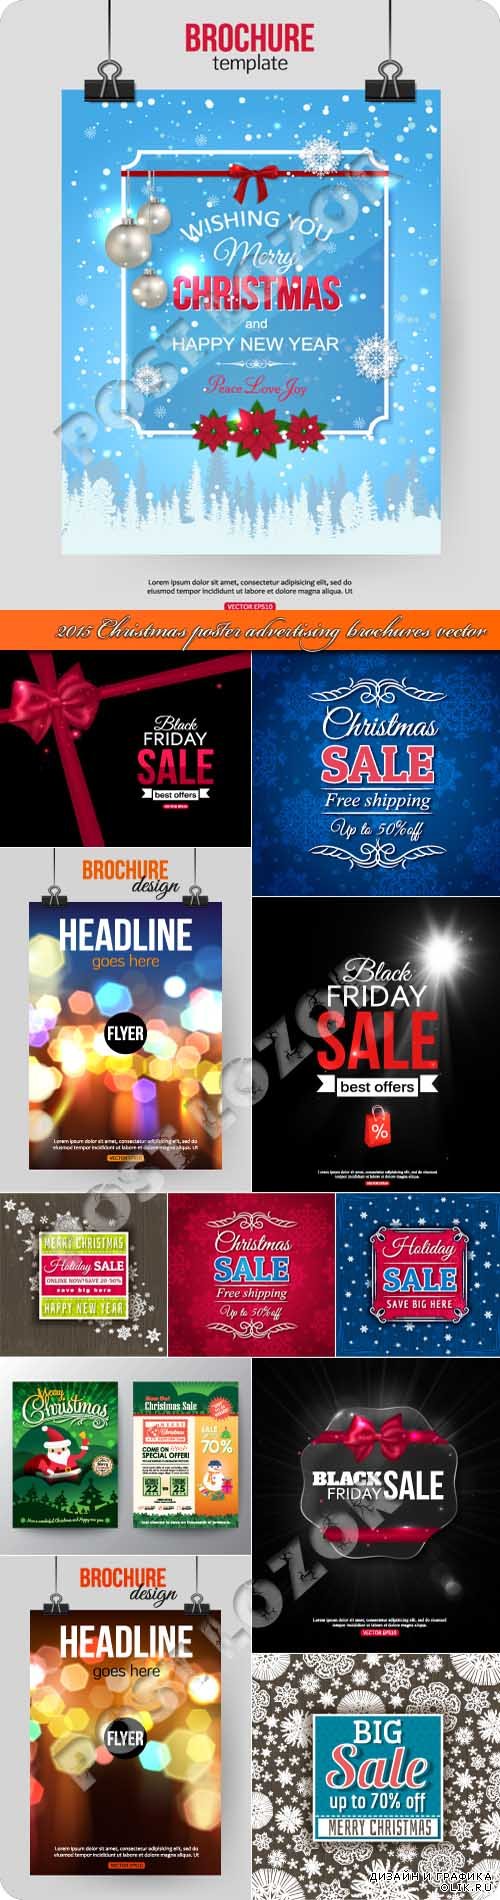 2015 Christmas poster advertising brochures vector